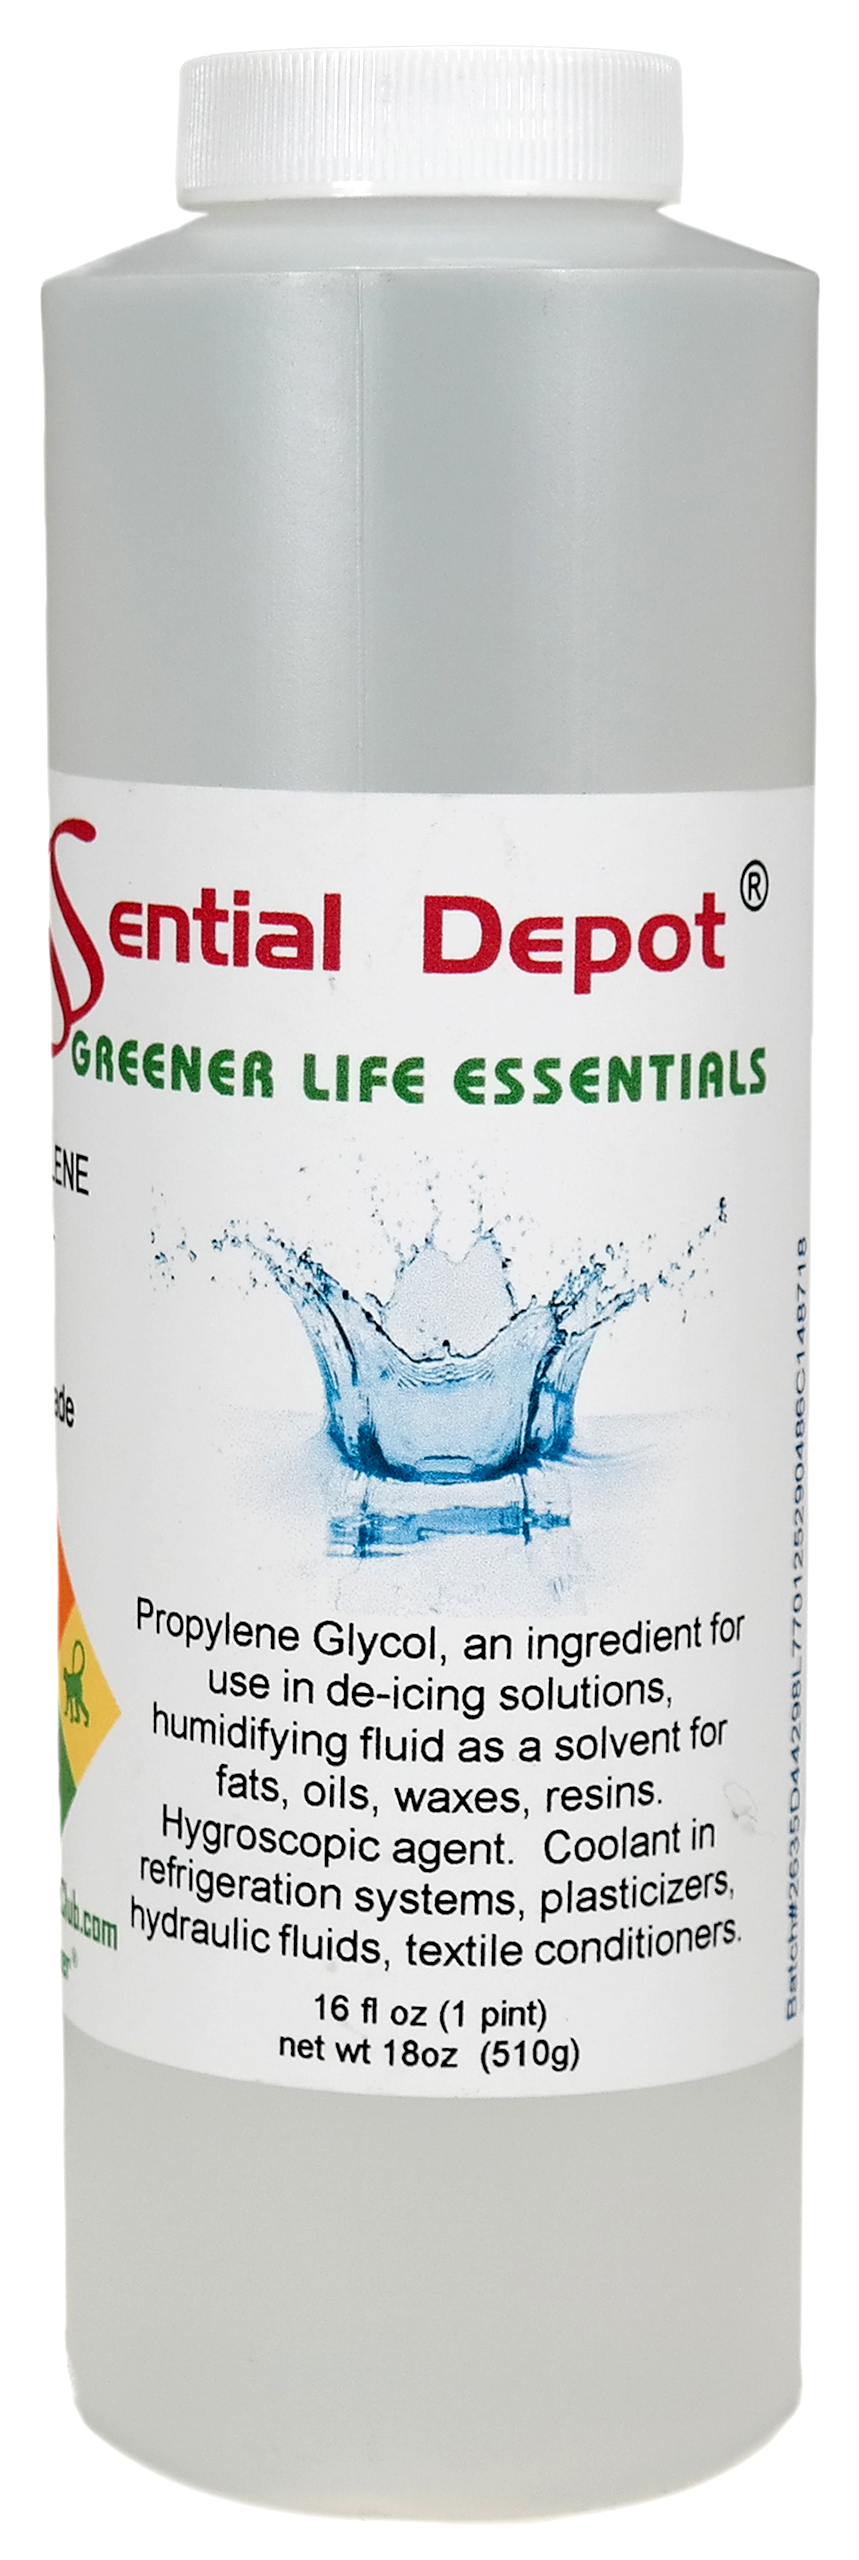 Sodium Hydroxide Lye - Food Grade - USP - 1.25 lb - 4 x 5 oz. Bottles